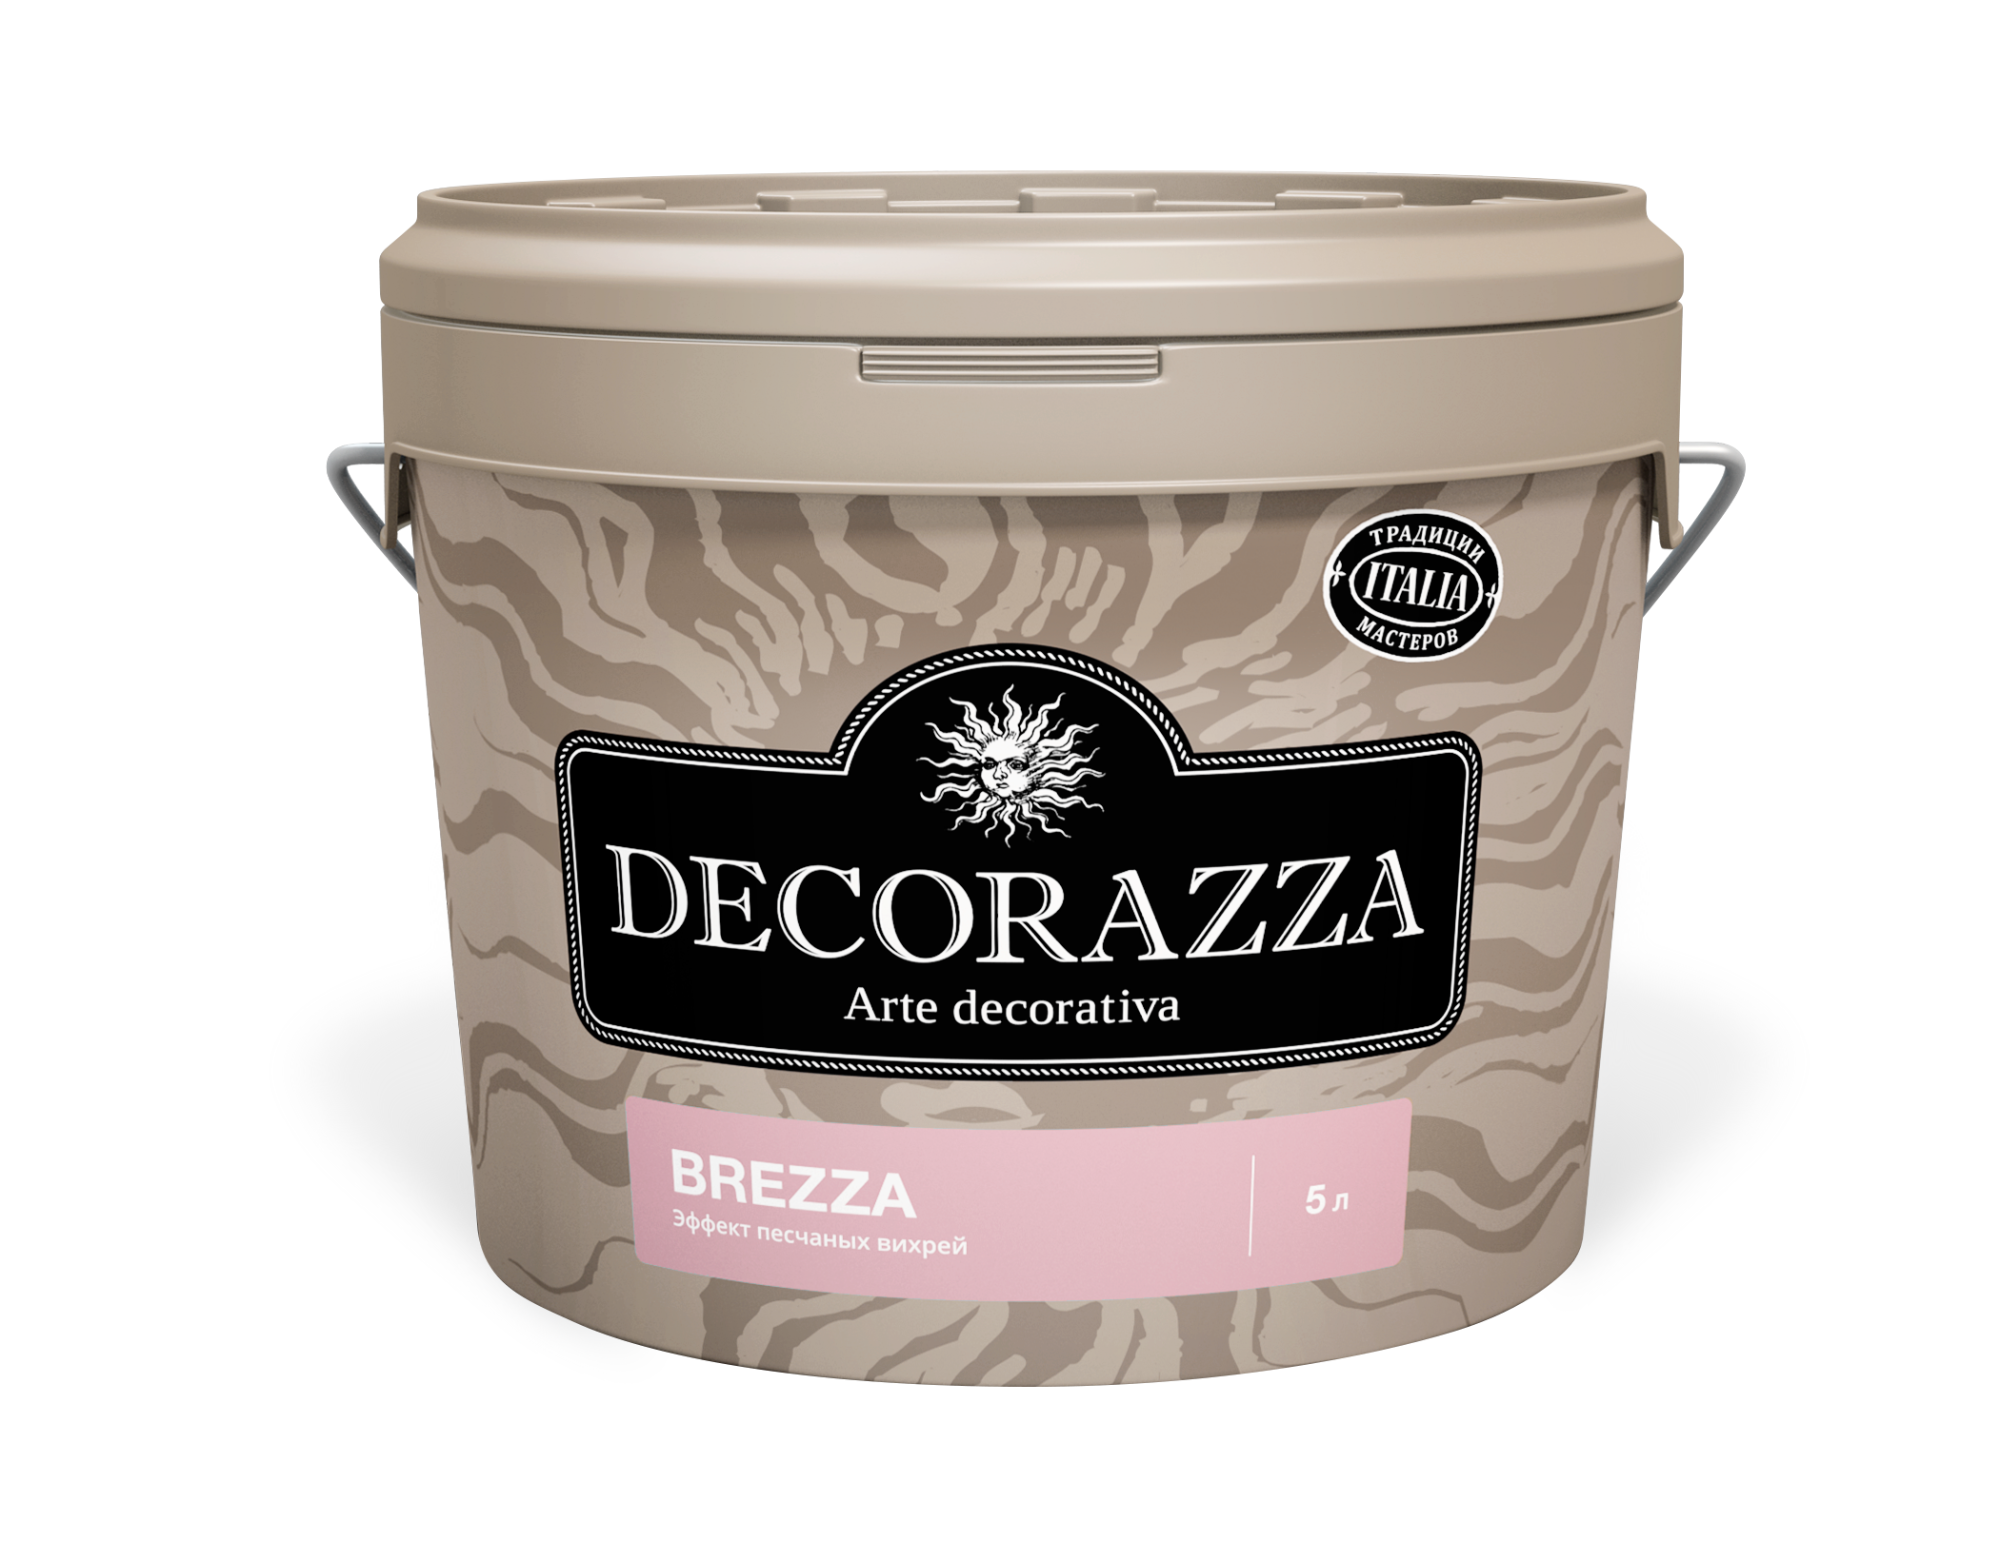 Decorazza BREZZA / Брицца Декоративный материал с эффектом песчаных вихрей 5л